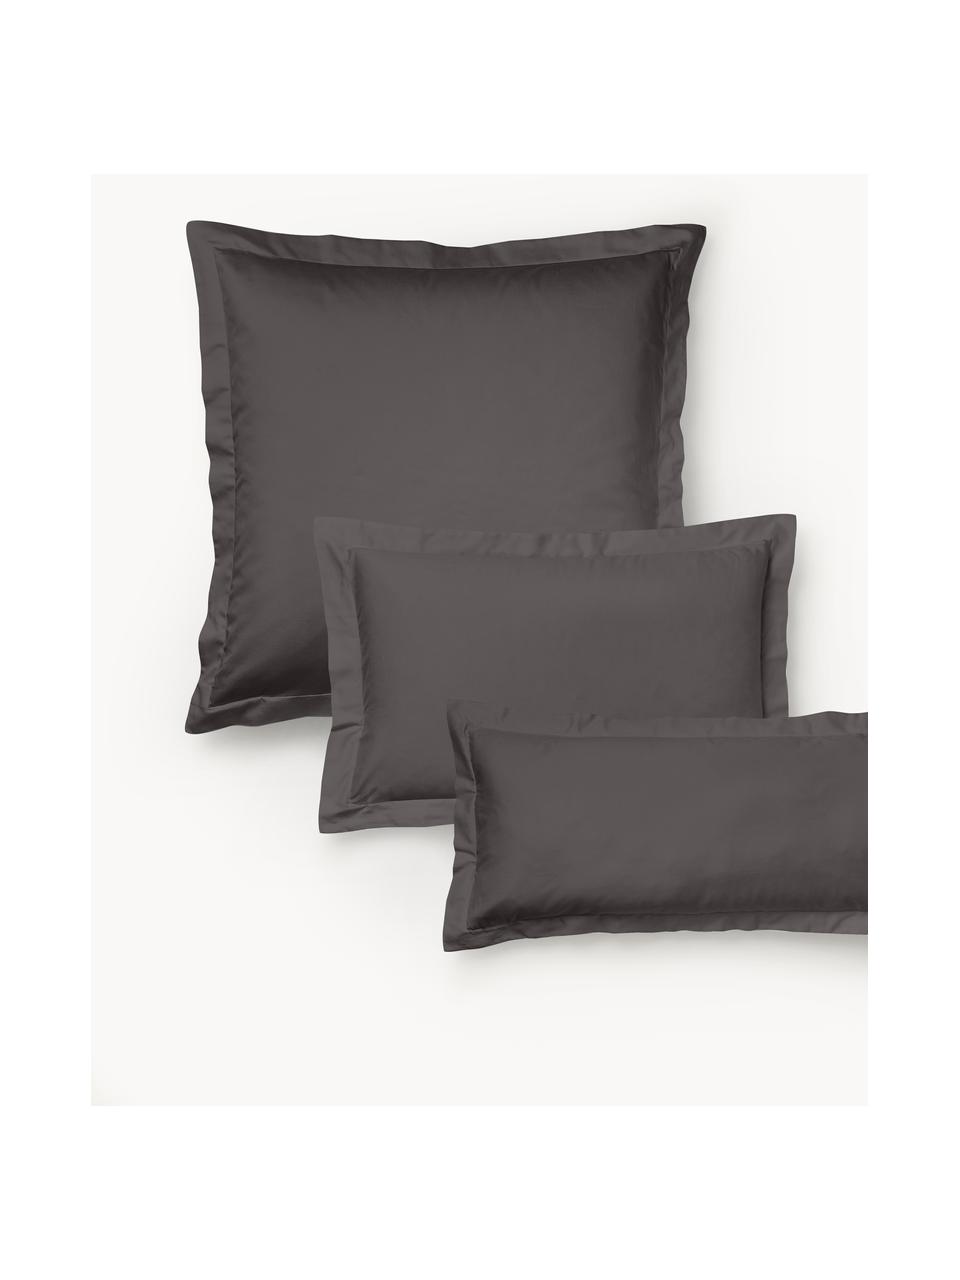 Funda de almohada de satén Premium, Gris oscuro, An 45 x L 110 cm